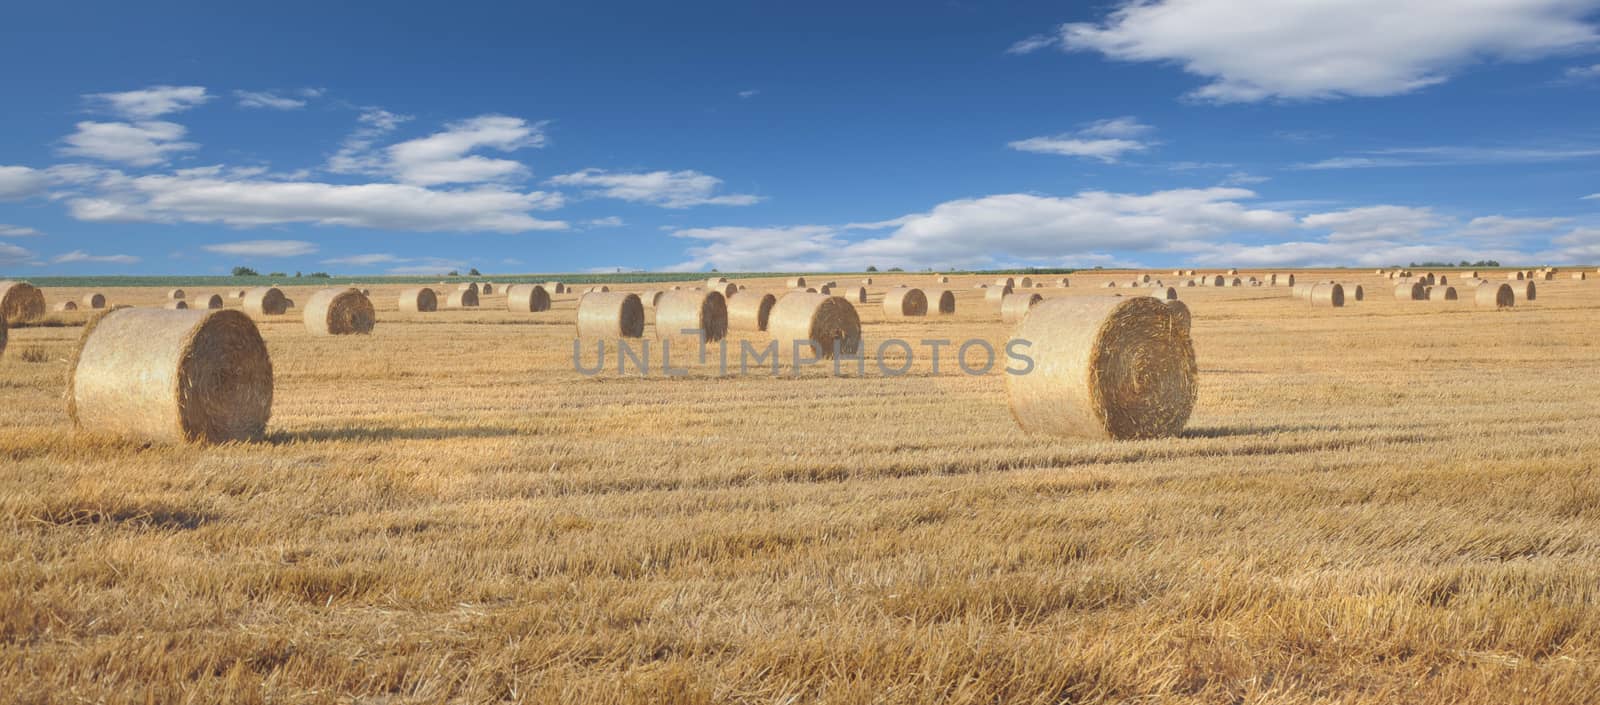 haystack against the blue sky by Nikola30